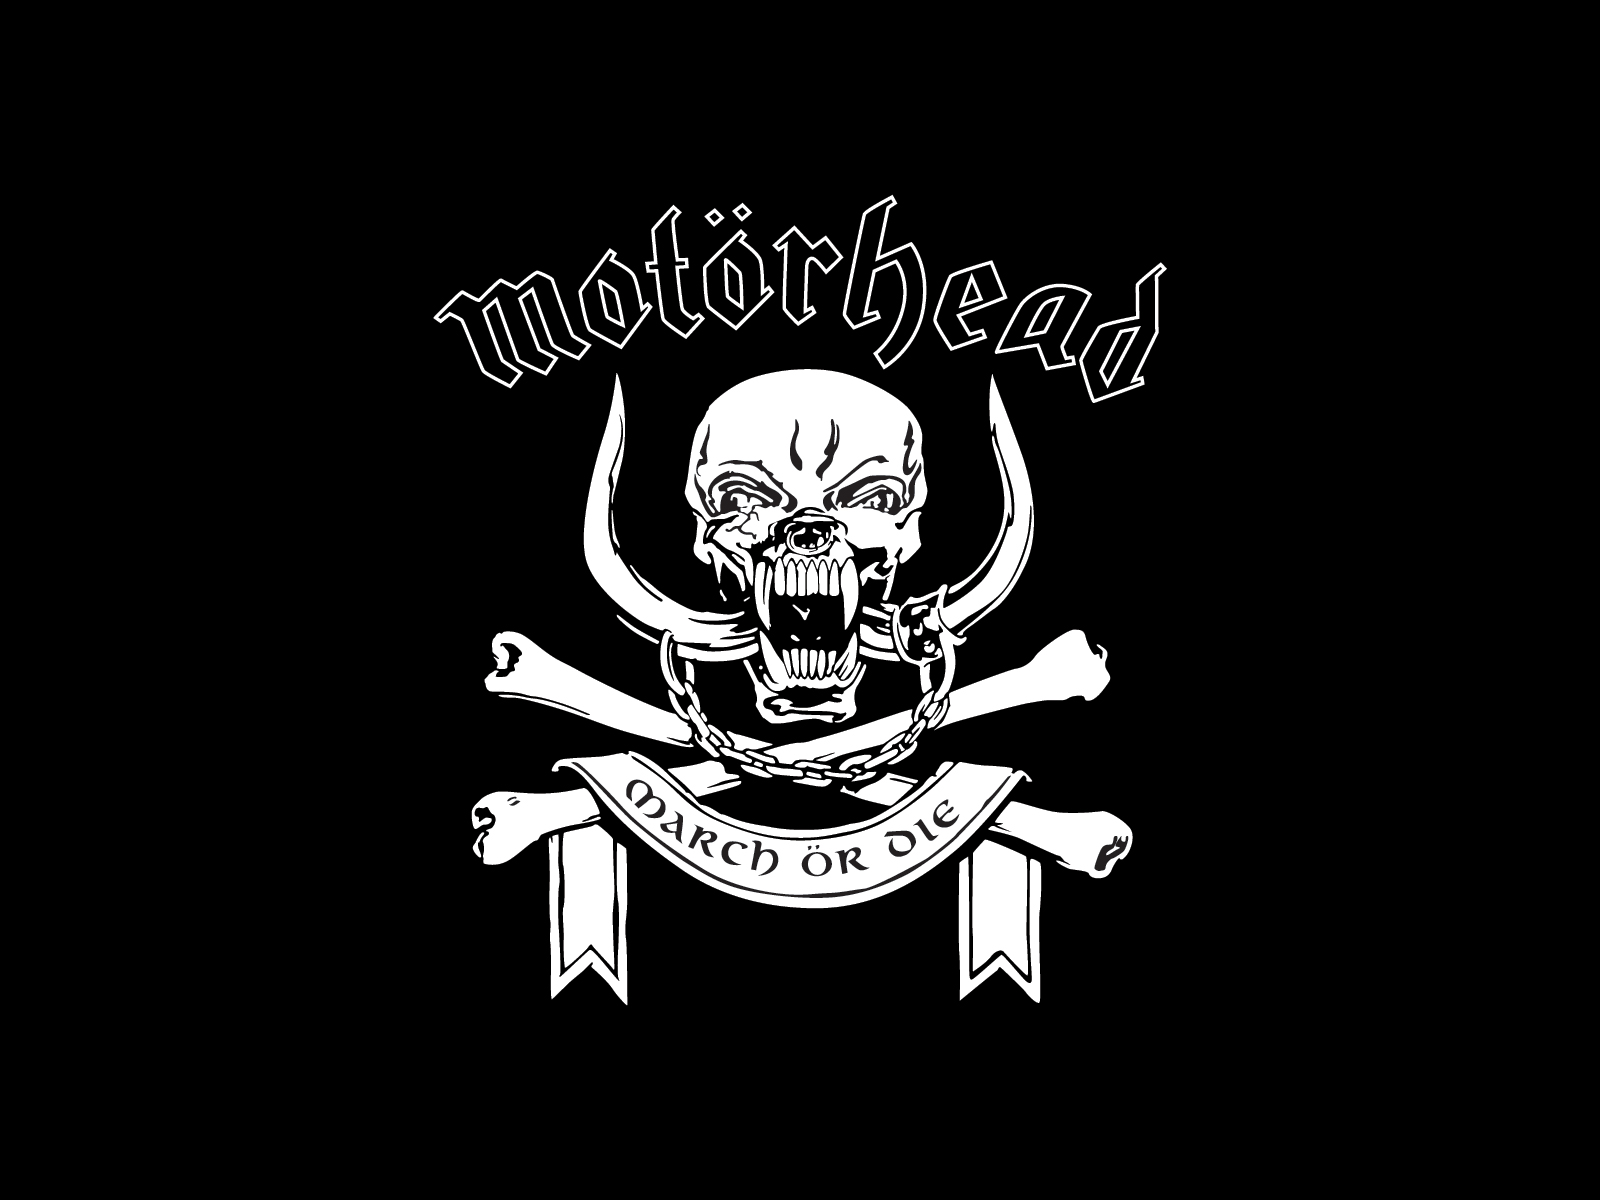 motorhead wallpaper | Band logos - Rock band logos, metal bands ...